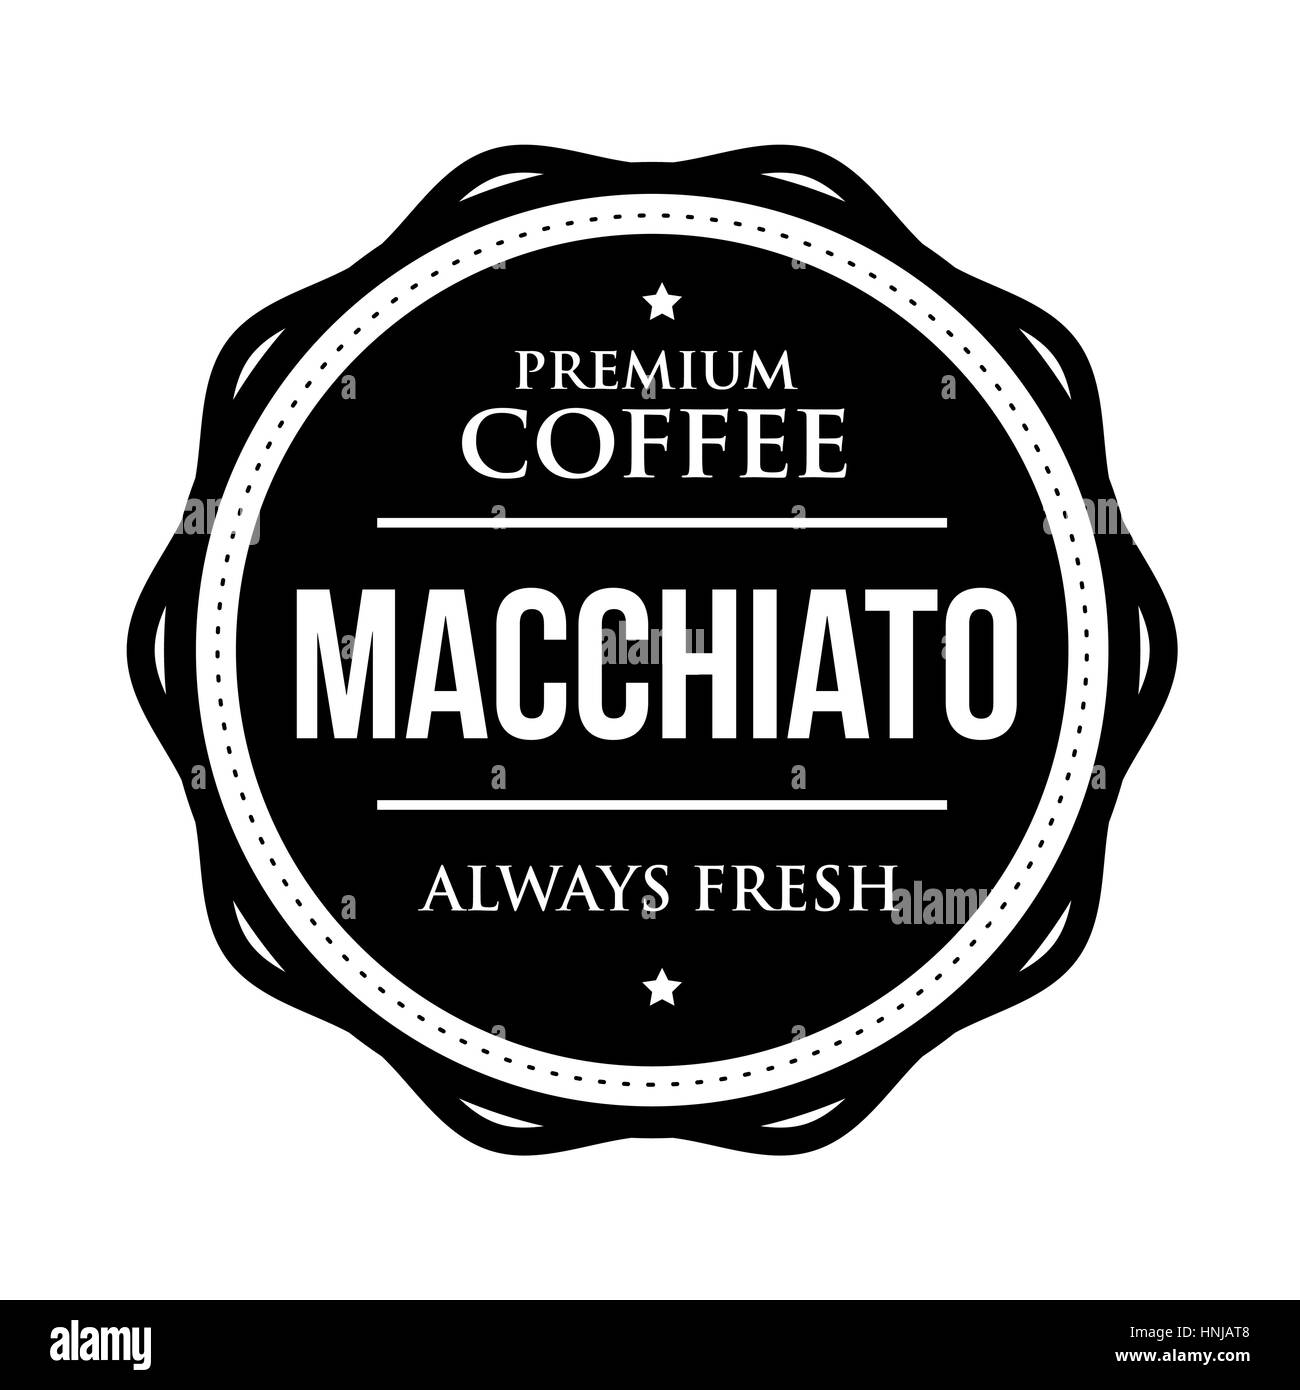 Coffee Macchiato vintage stamp Stock Vector